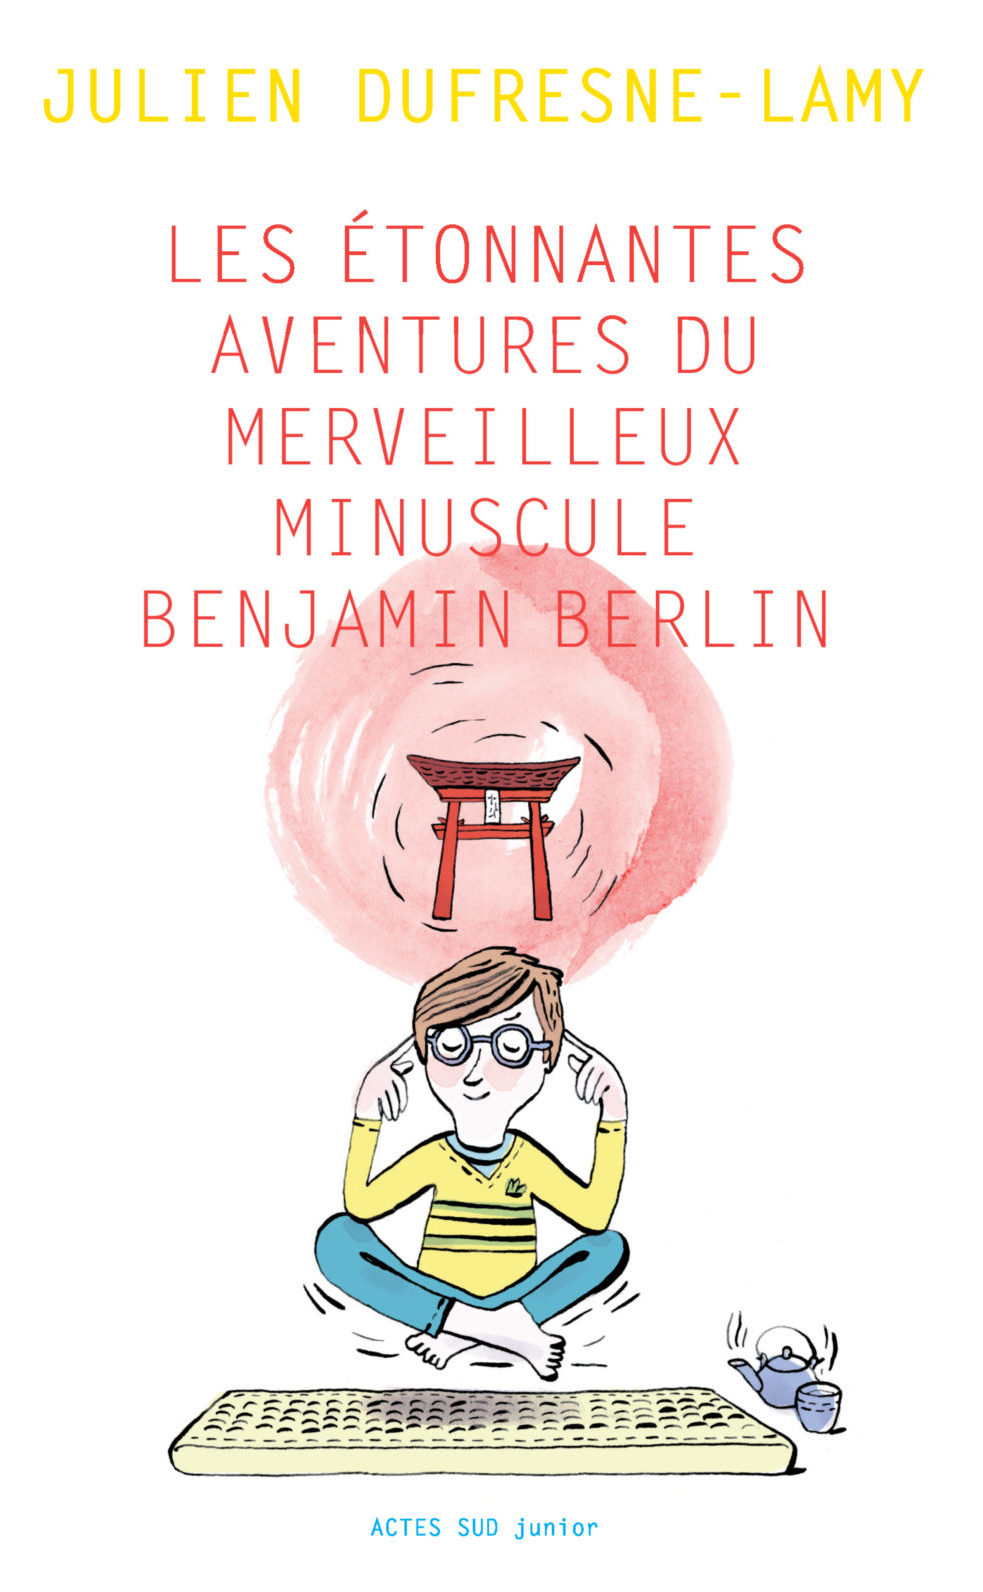 Les étonnantes aventures du merveilleux minuscule Benjamin Berlin